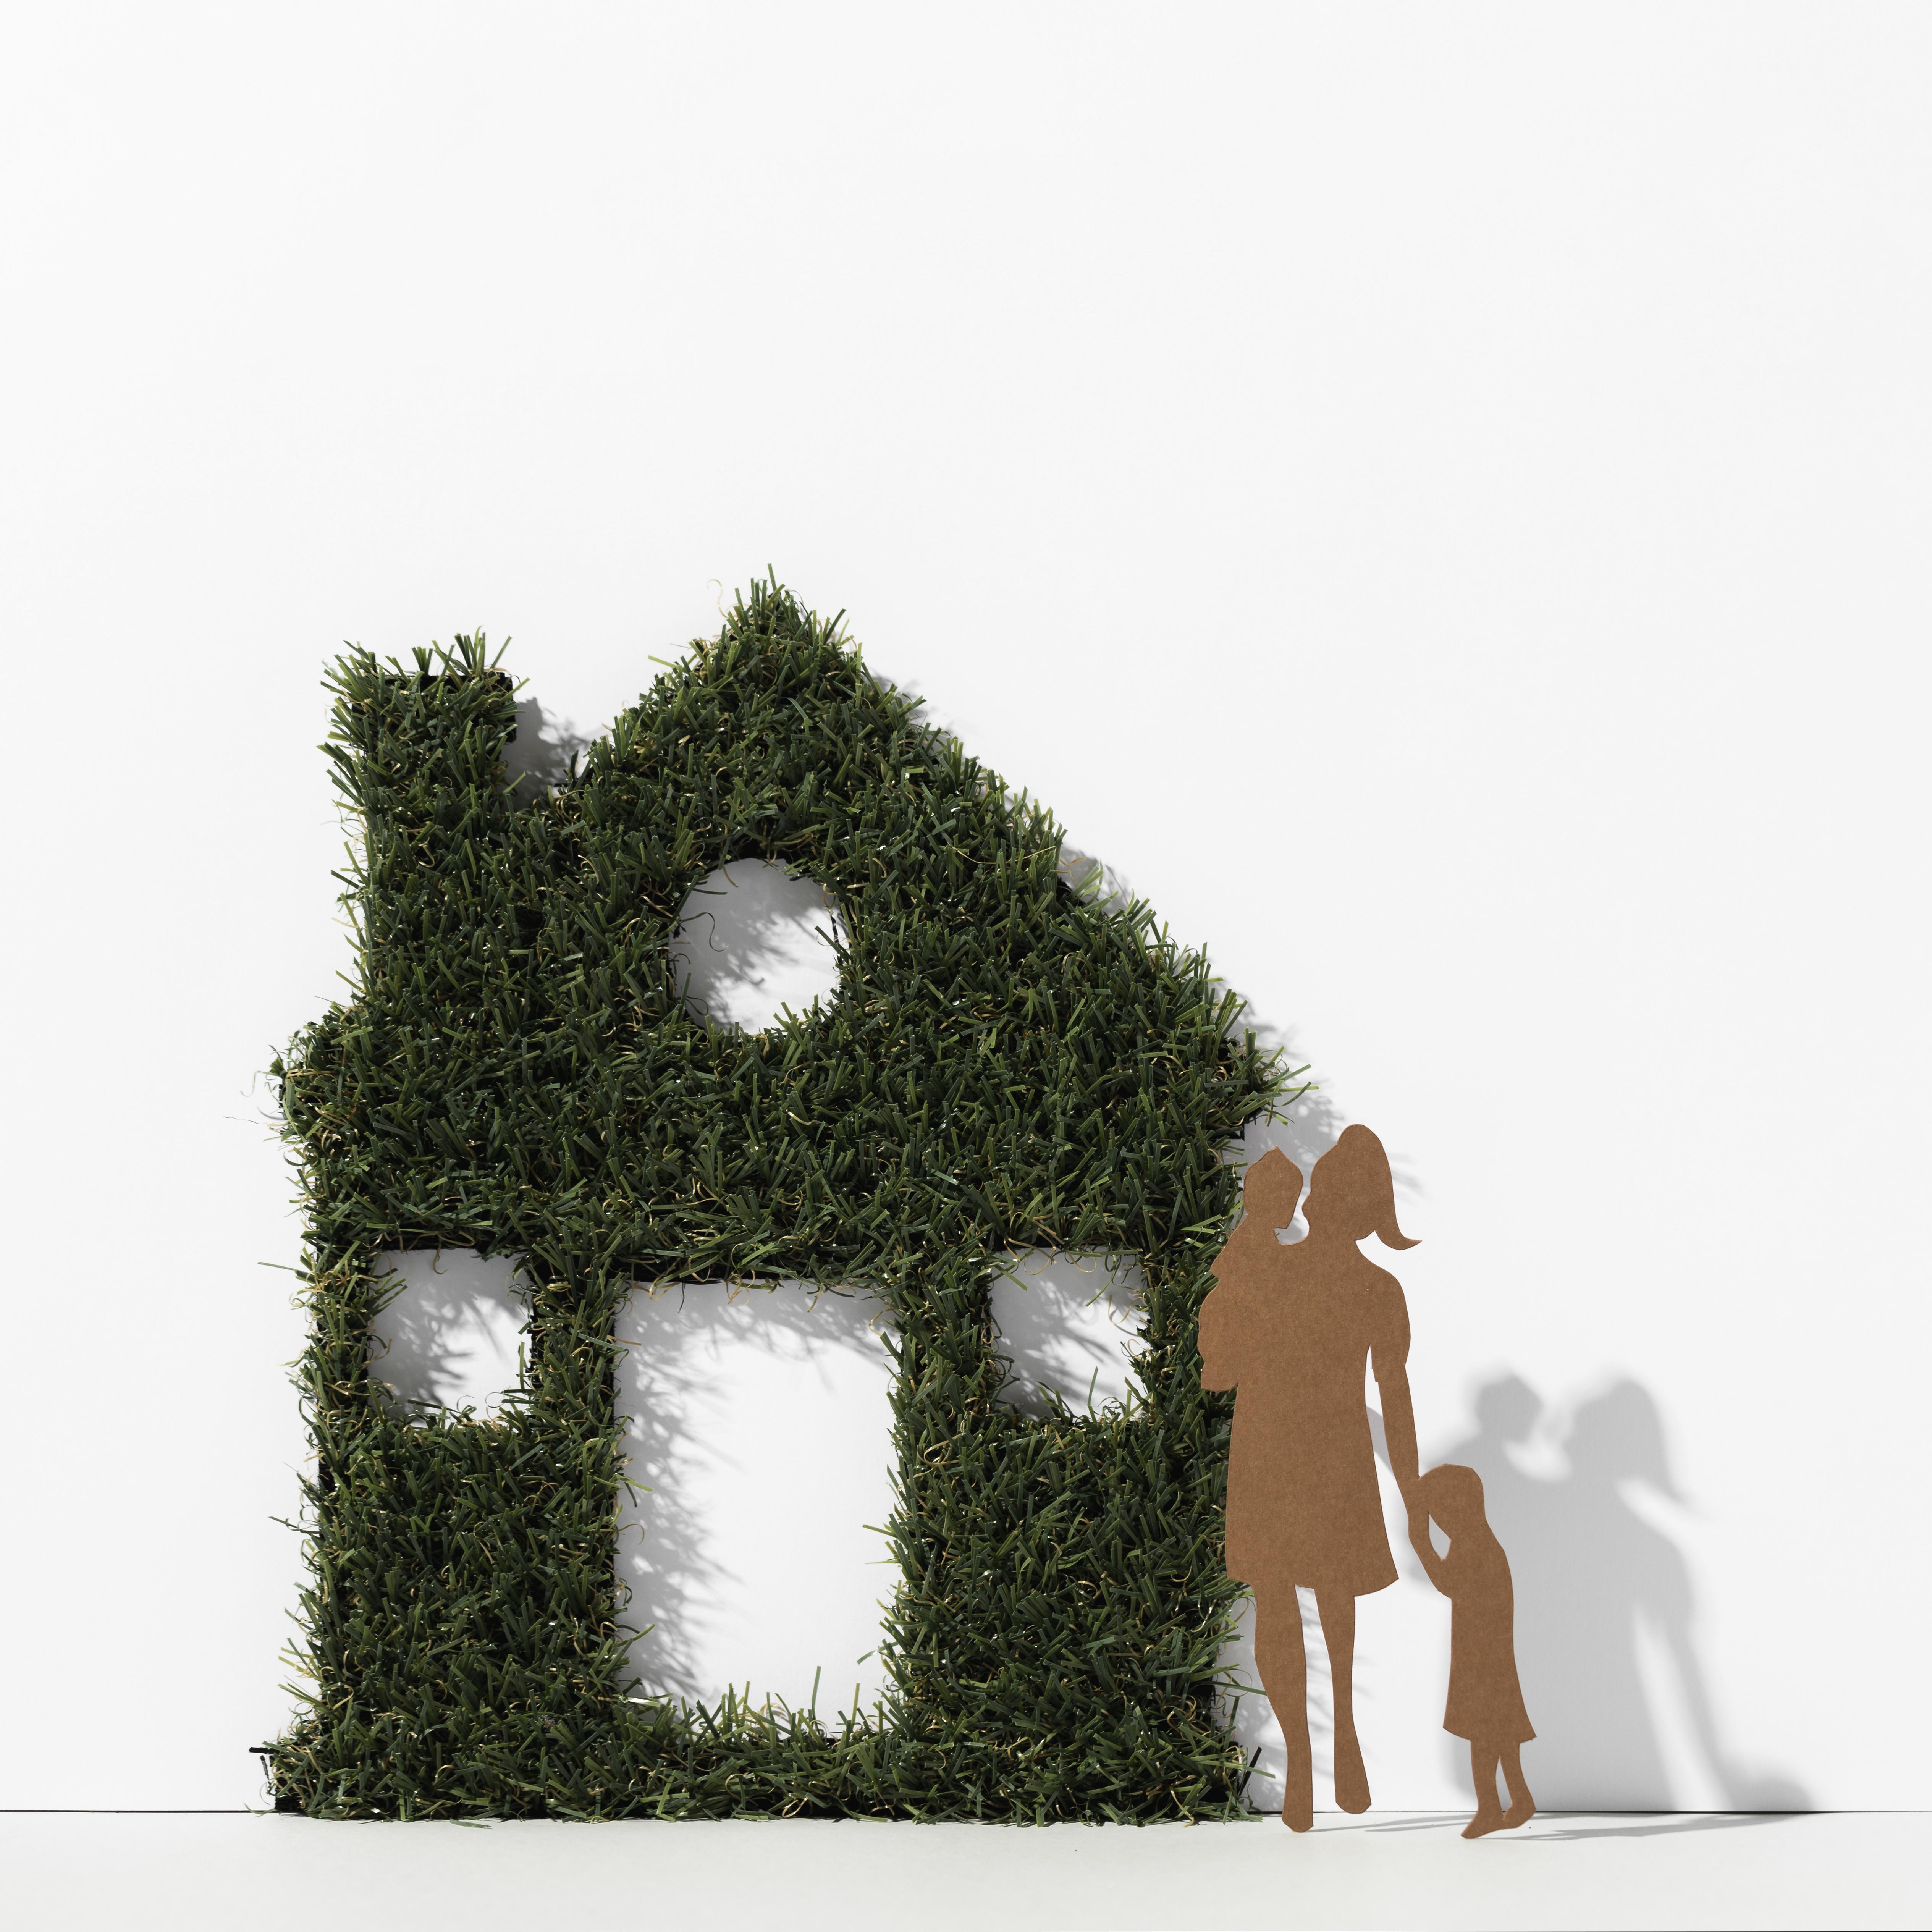 Sustainable housing